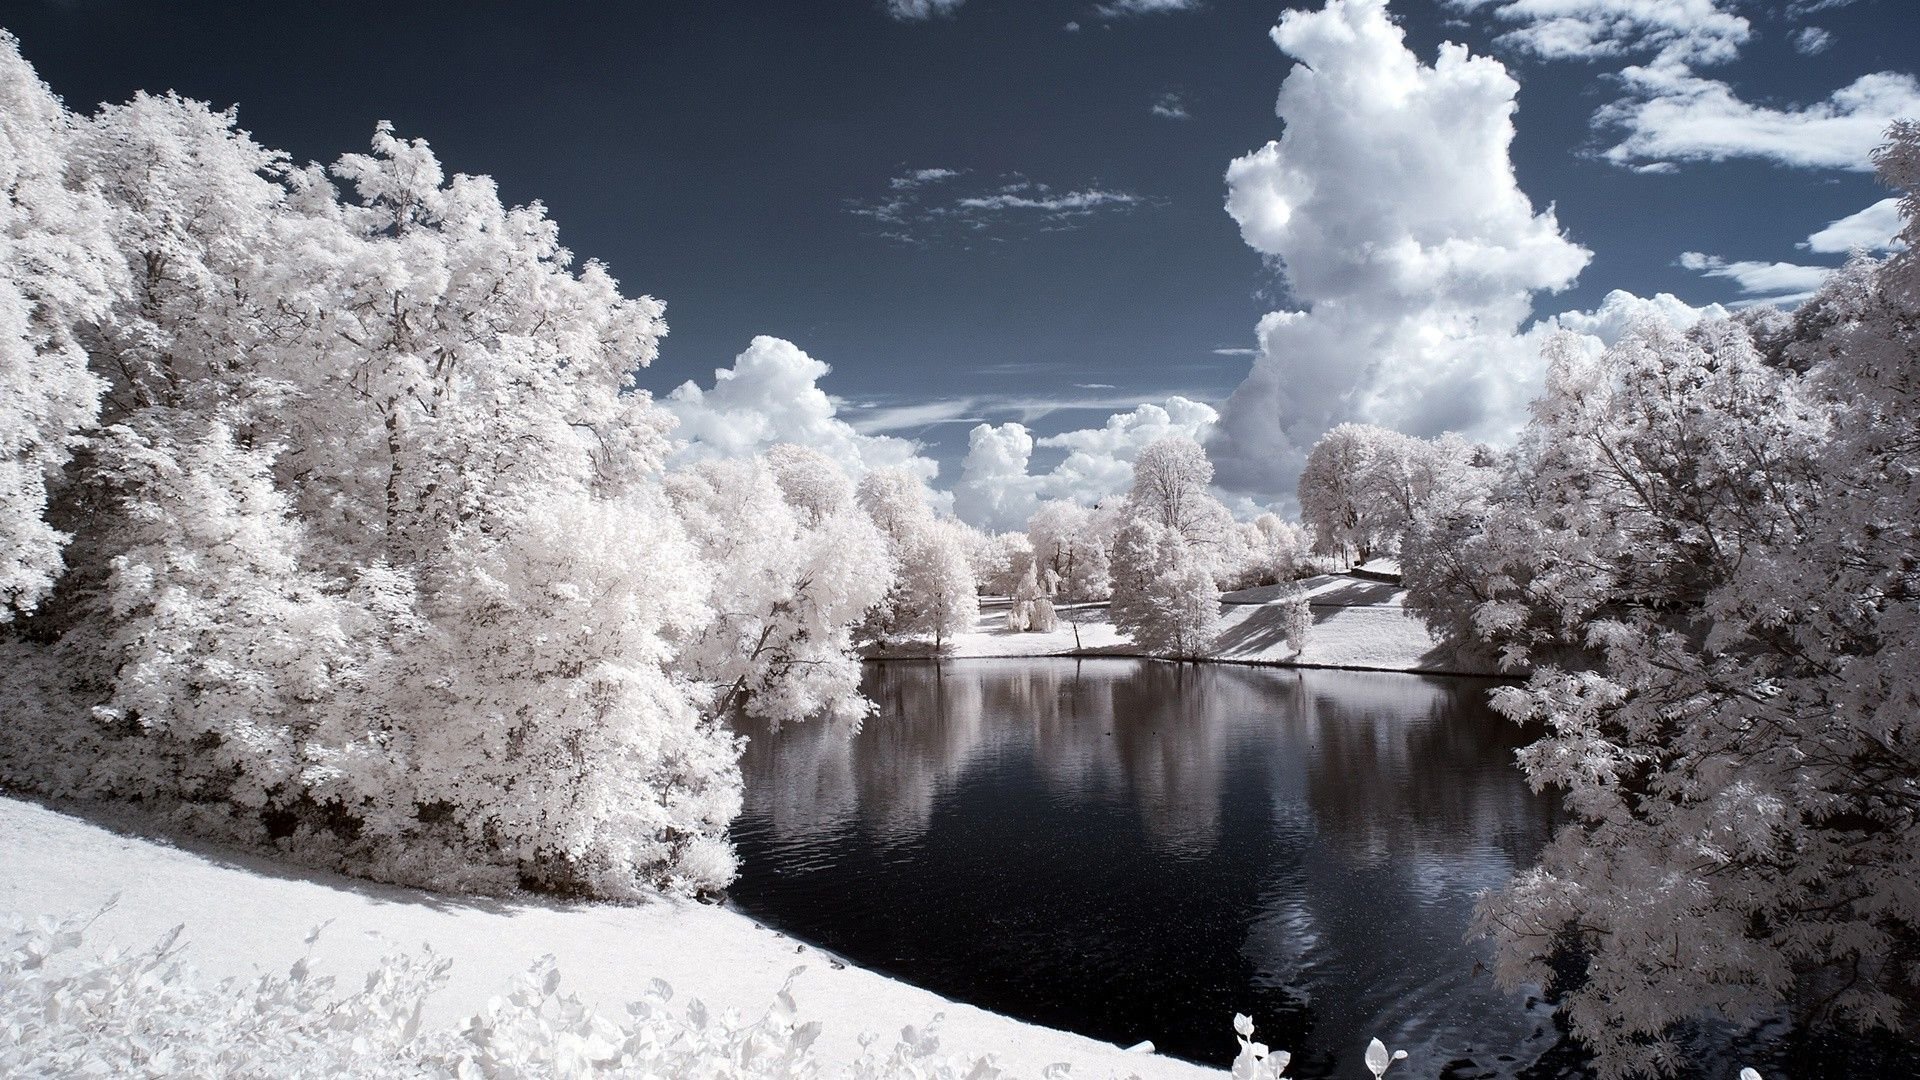 White Winter Background